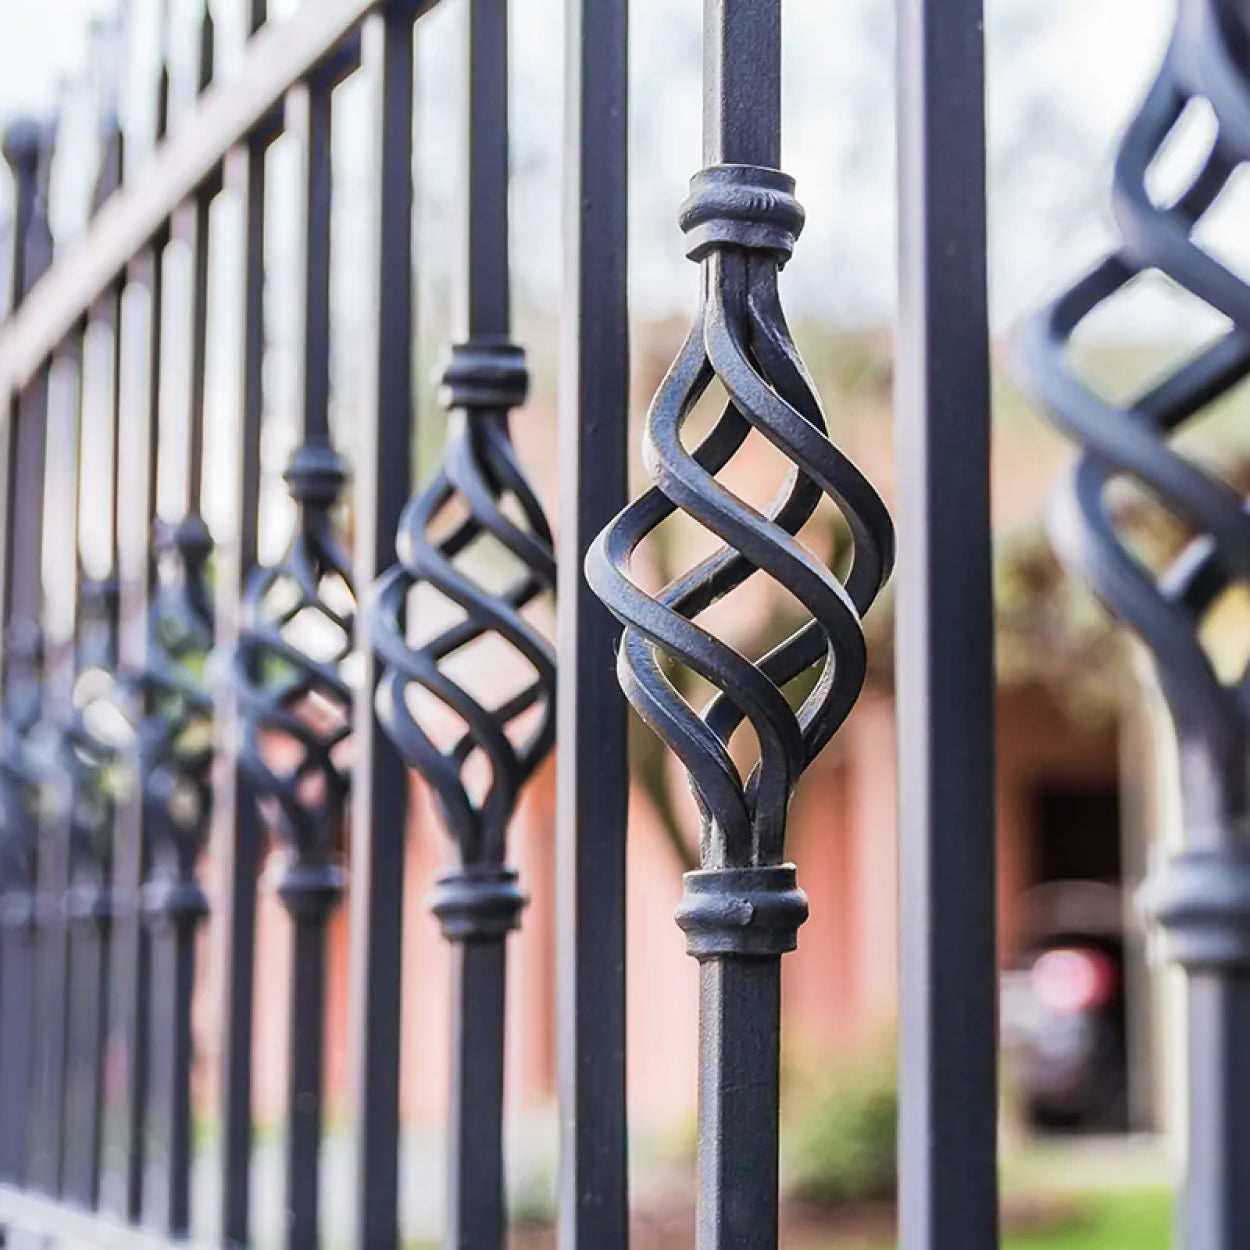 koszyki cebulki ozdobne do balustrad bram ogrodzen metalowe